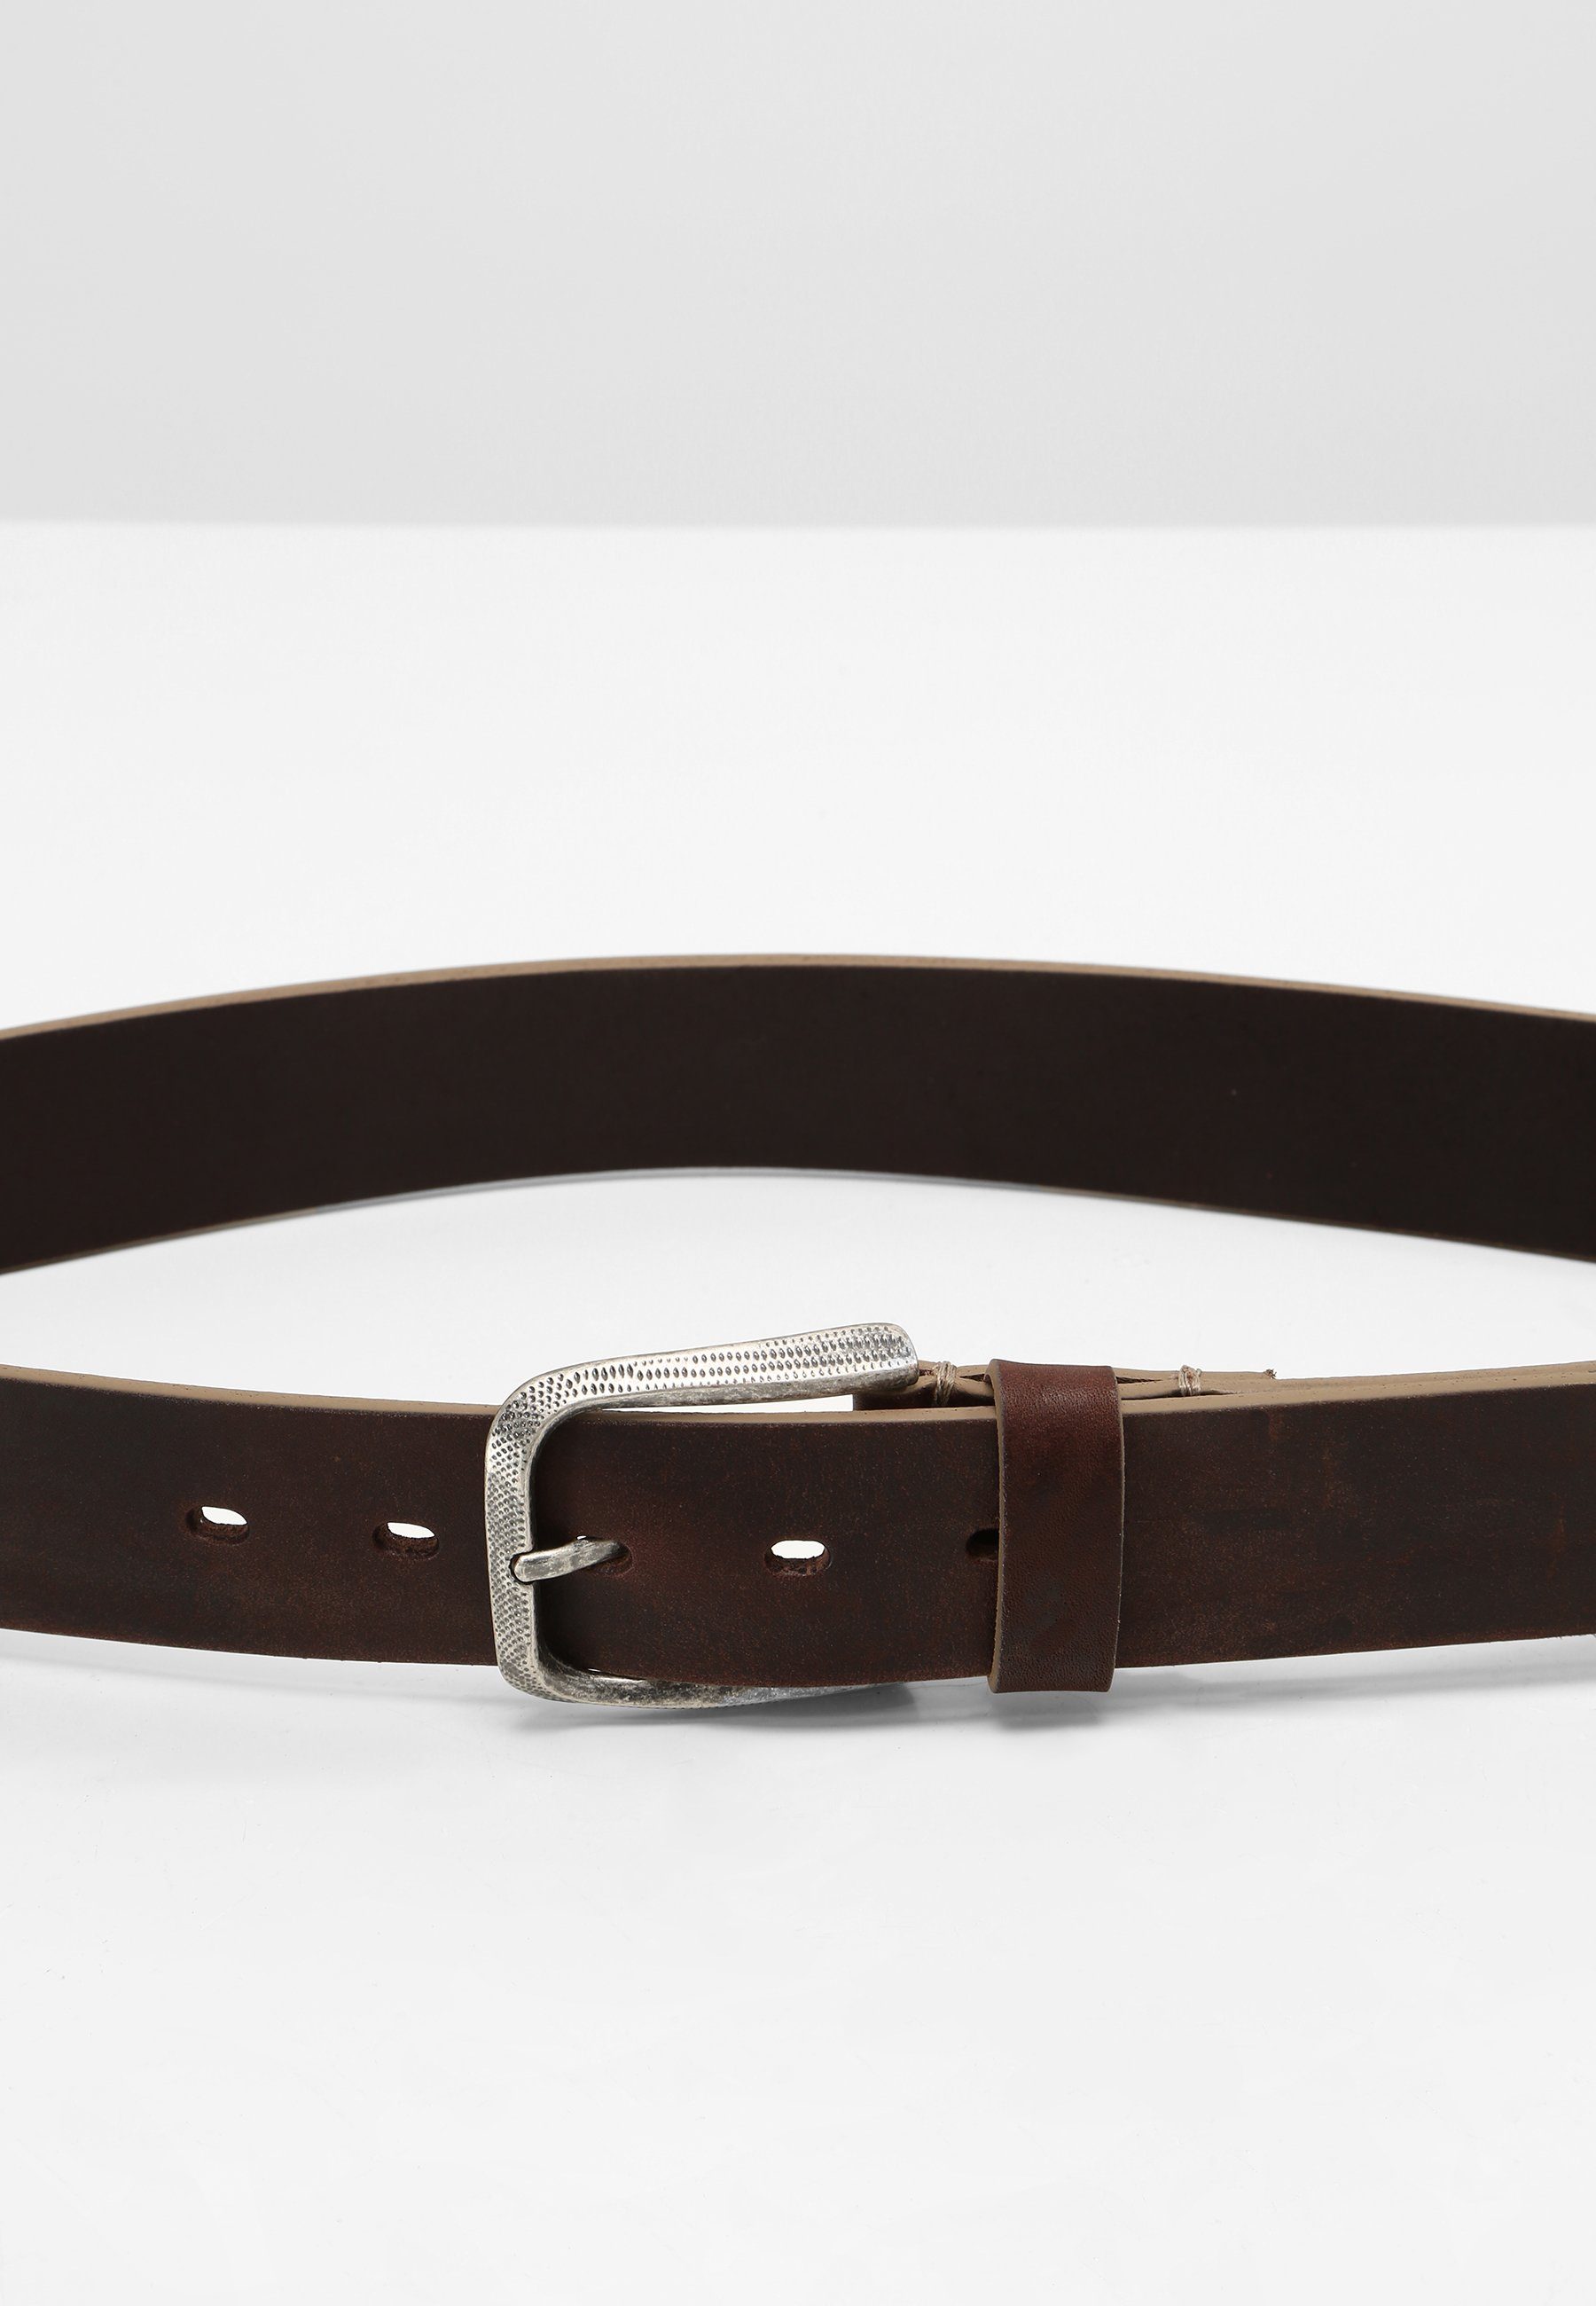 LLOYD Men’s Belts braun Vintage Ledergürtel